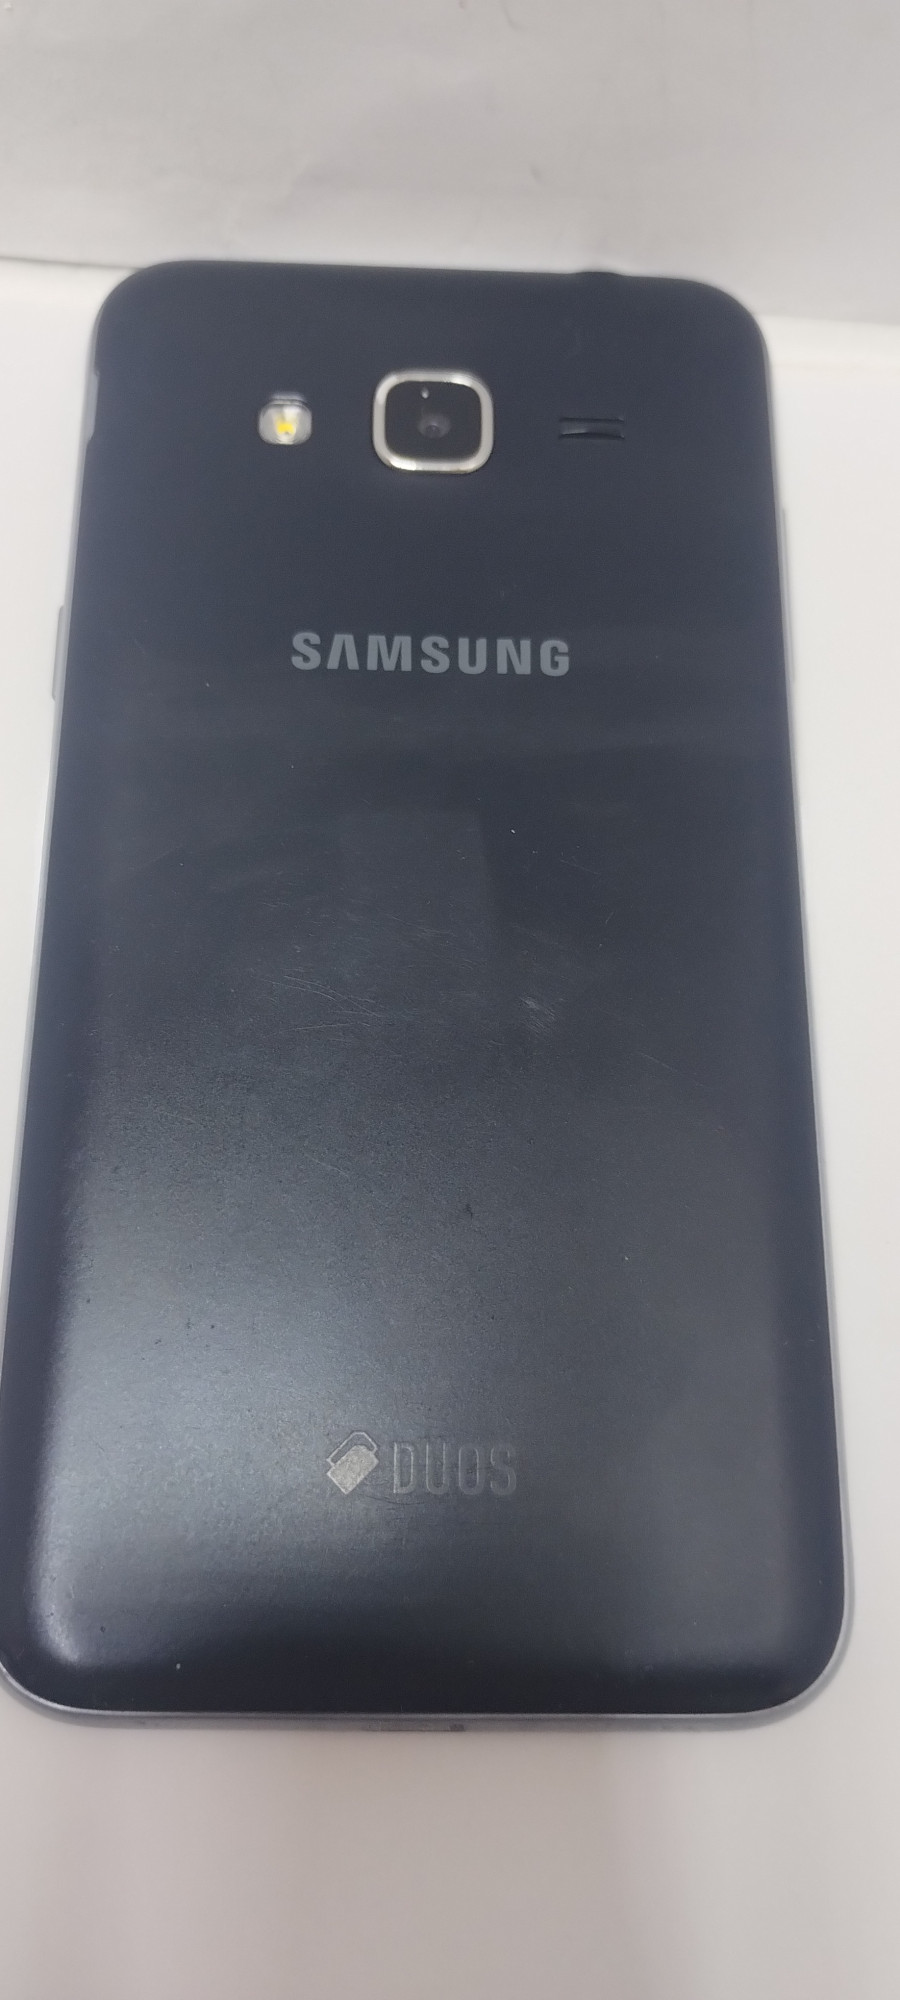 Samsung Galaxy J3 2016 Black (SM-J320H) 1/8Gb 6